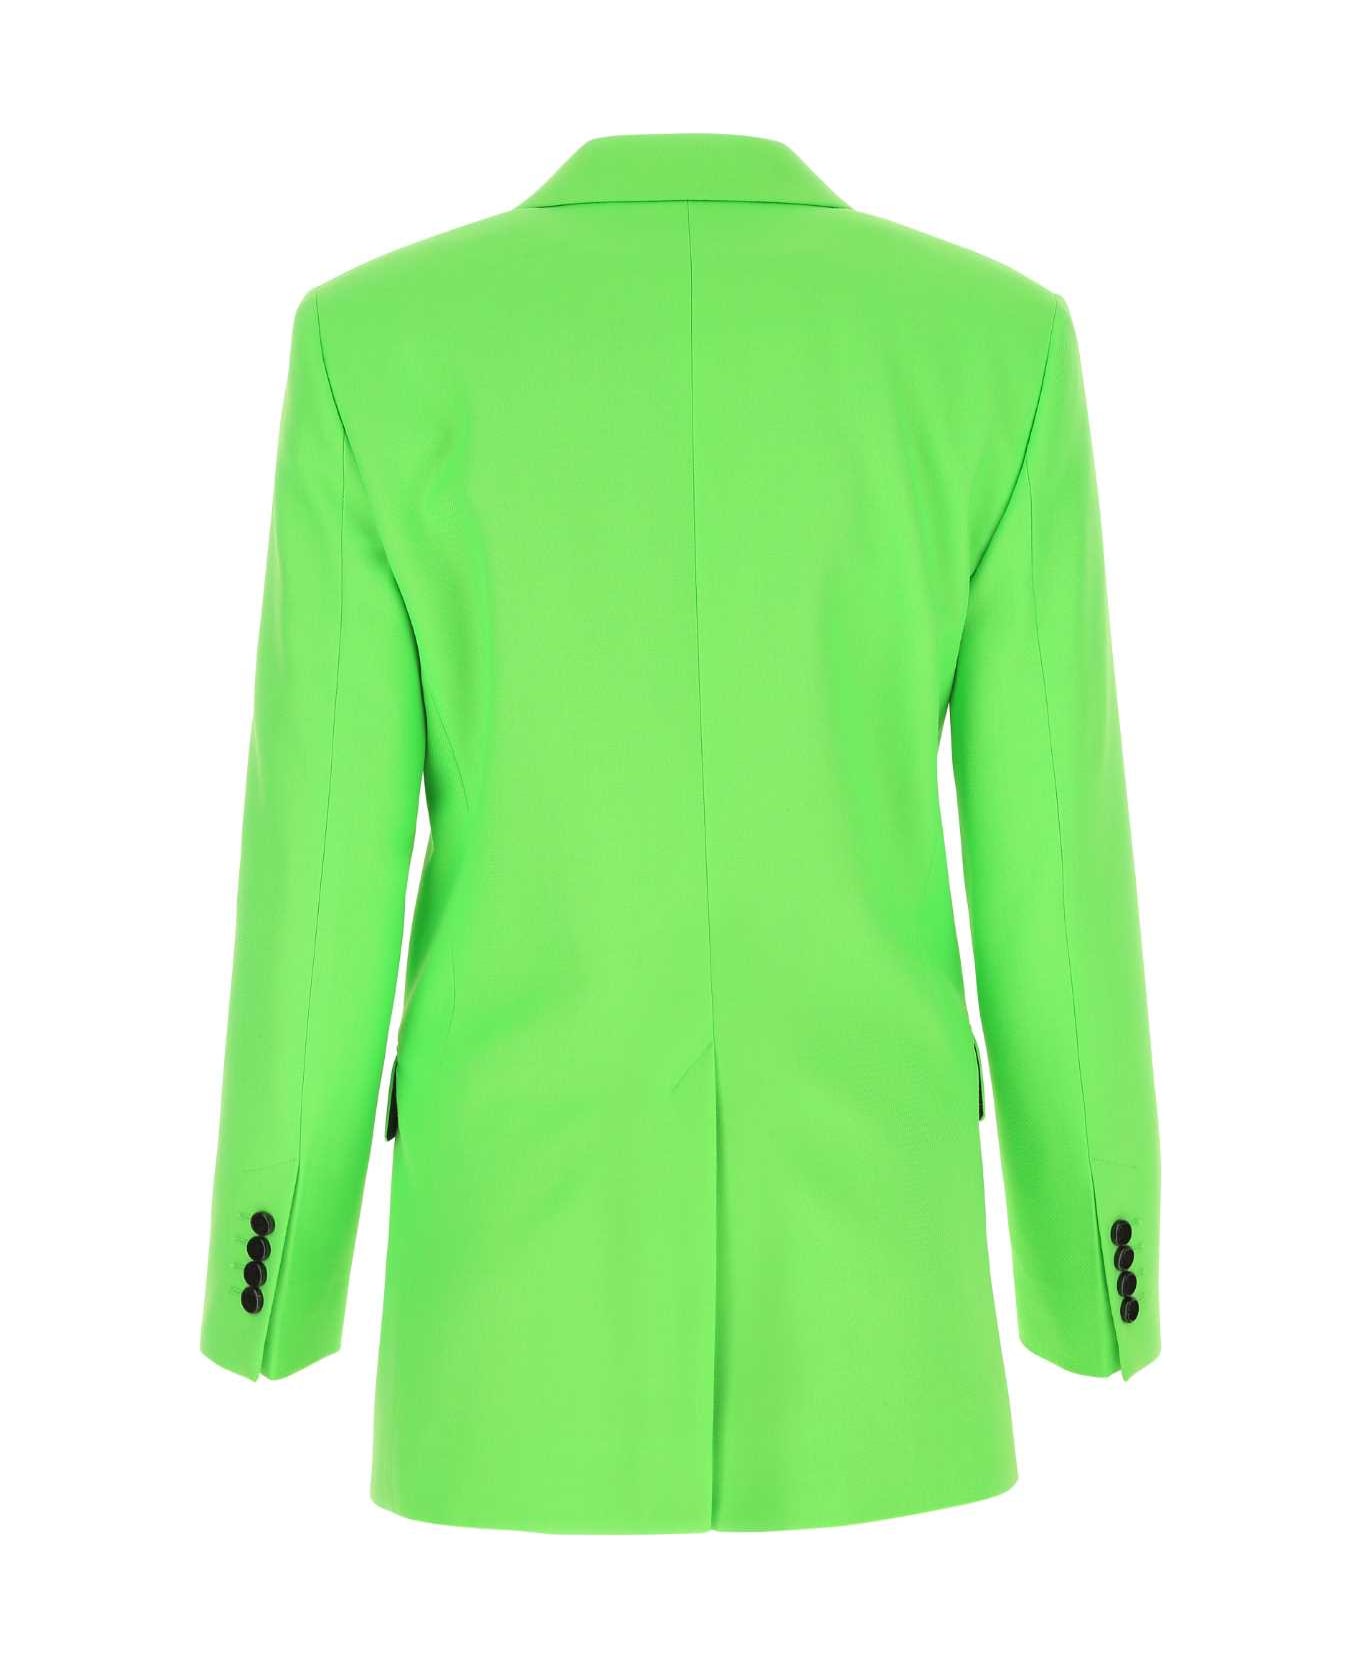 Ami Alexandre Mattiussi Fluo Green Wool And Acrylic Blazer - 300